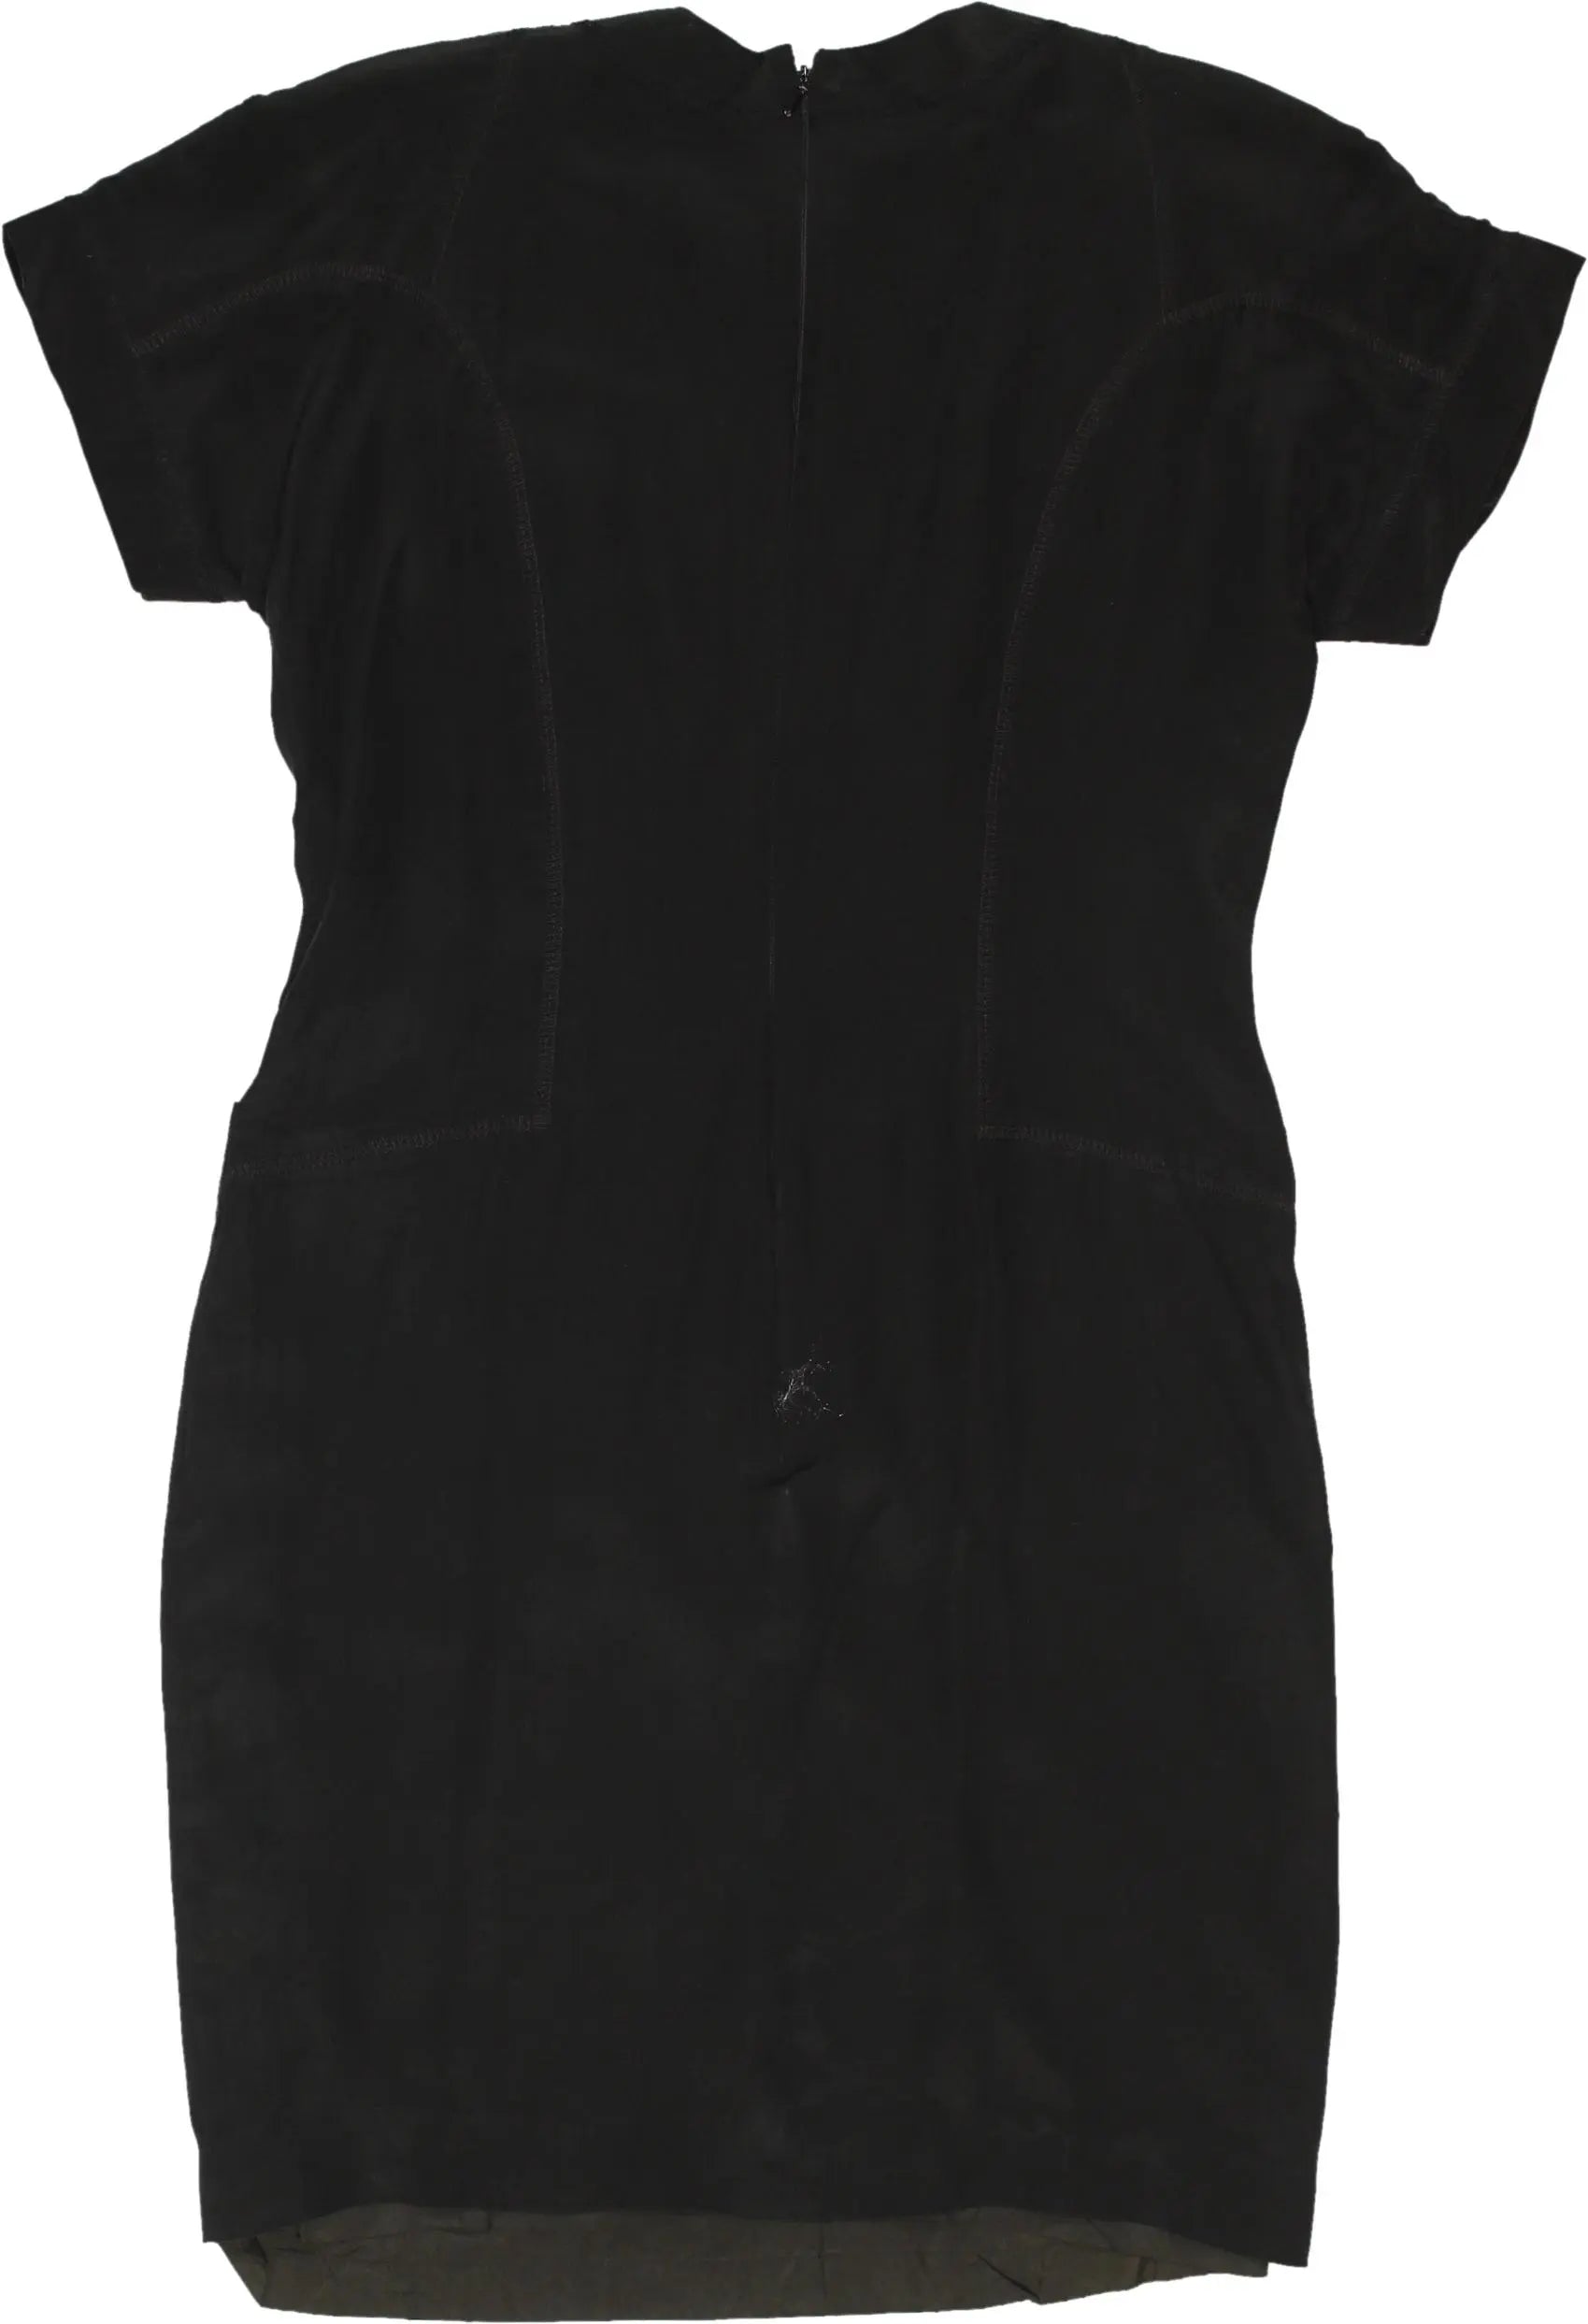 Lauren Alexandra Petites - 90s Silk Dress- ThriftTale.com - Vintage and second handclothing